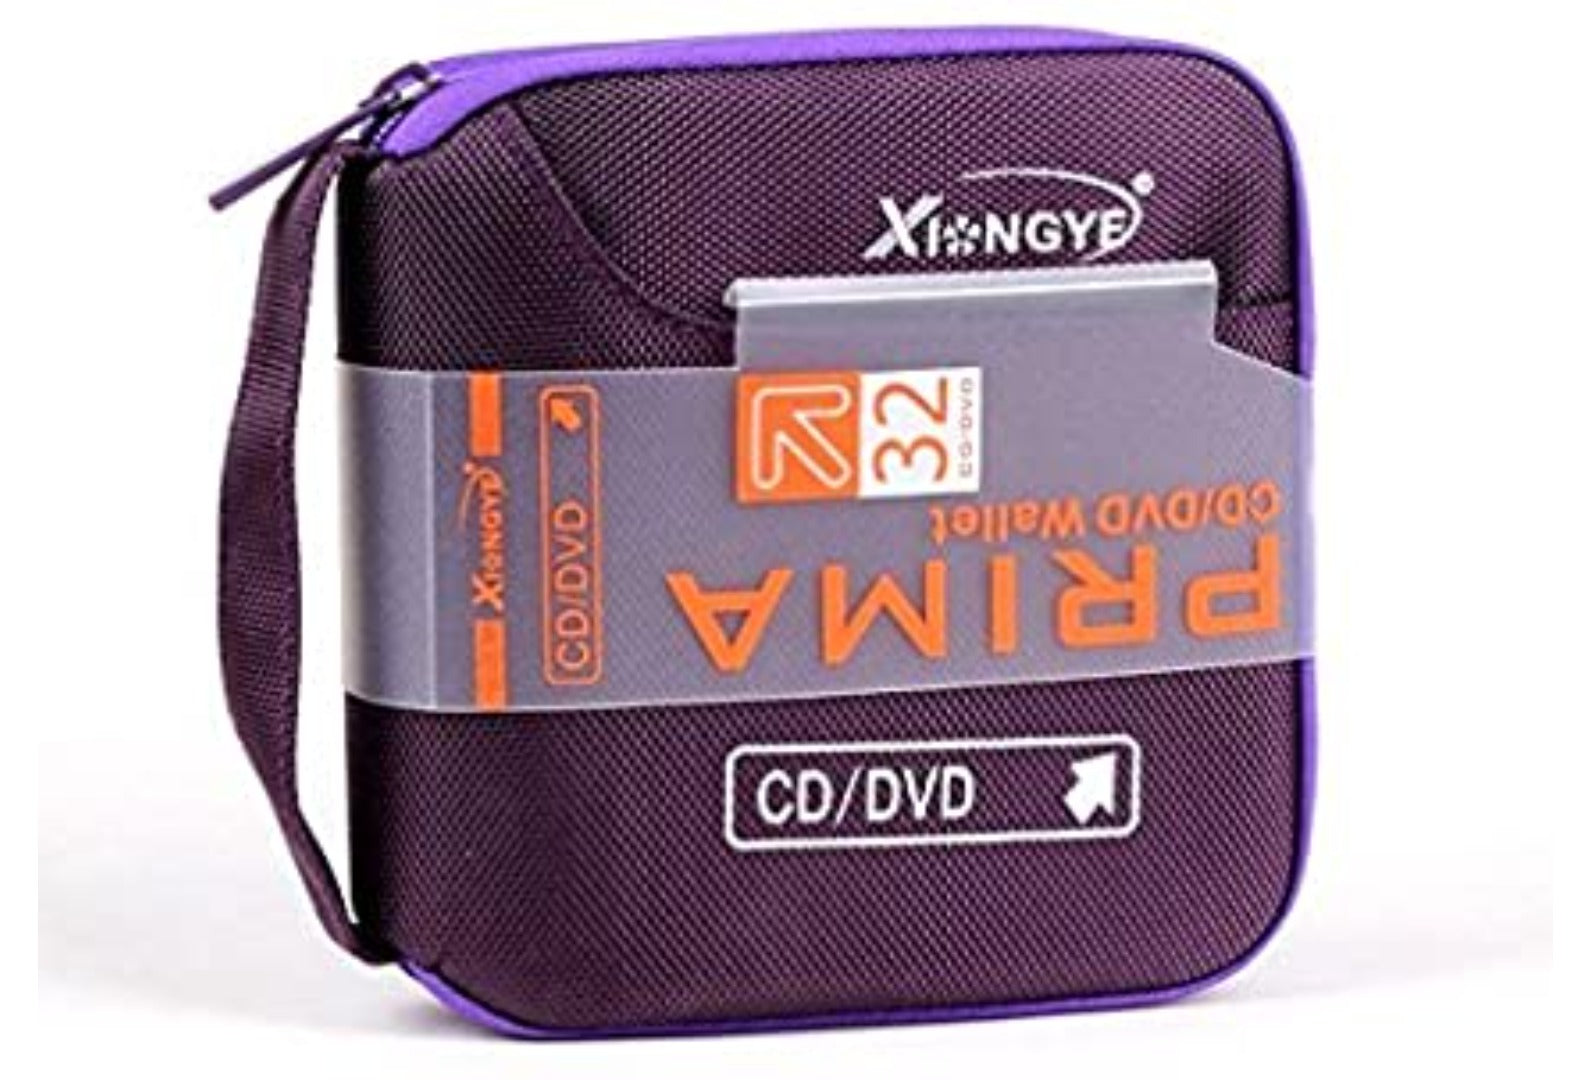 New 32 Disc CD DVD Portable Wallet Storage Organizer Holder Case Bag Album Box - PURPLE